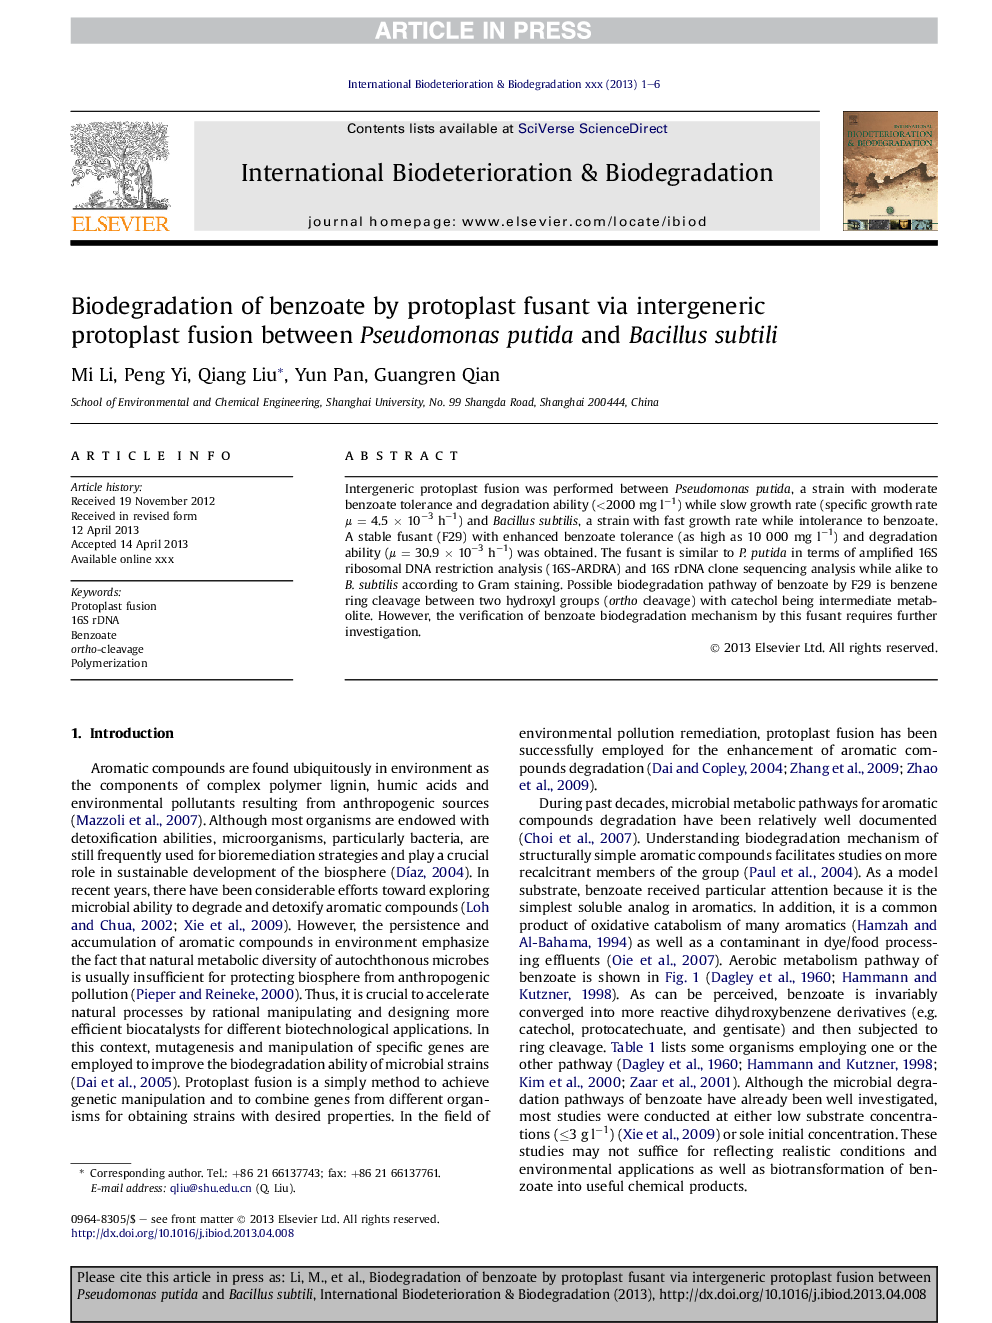 Biodegradation of benzoate by protoplast fusant via intergeneric protoplast fusion between Pseudomonas putida and Bacillus subtili